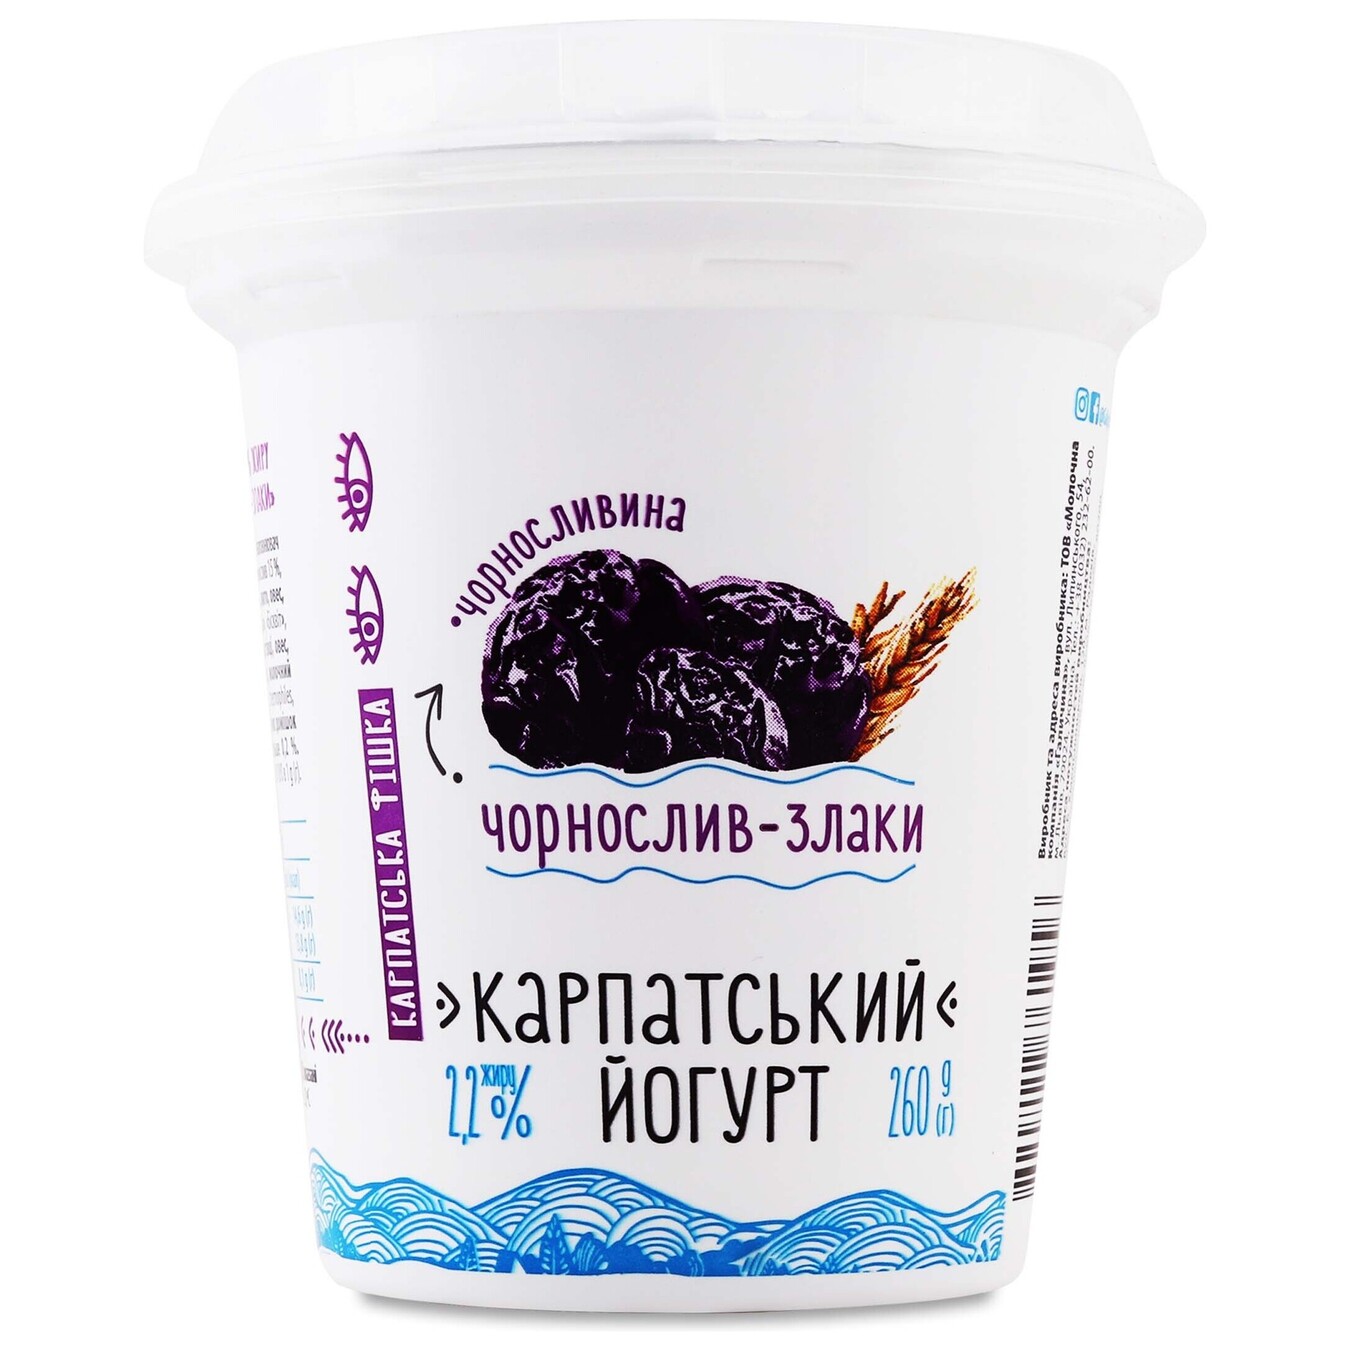 Йогурт Галичина Чорнослив-Злаки 2,2 % 260г